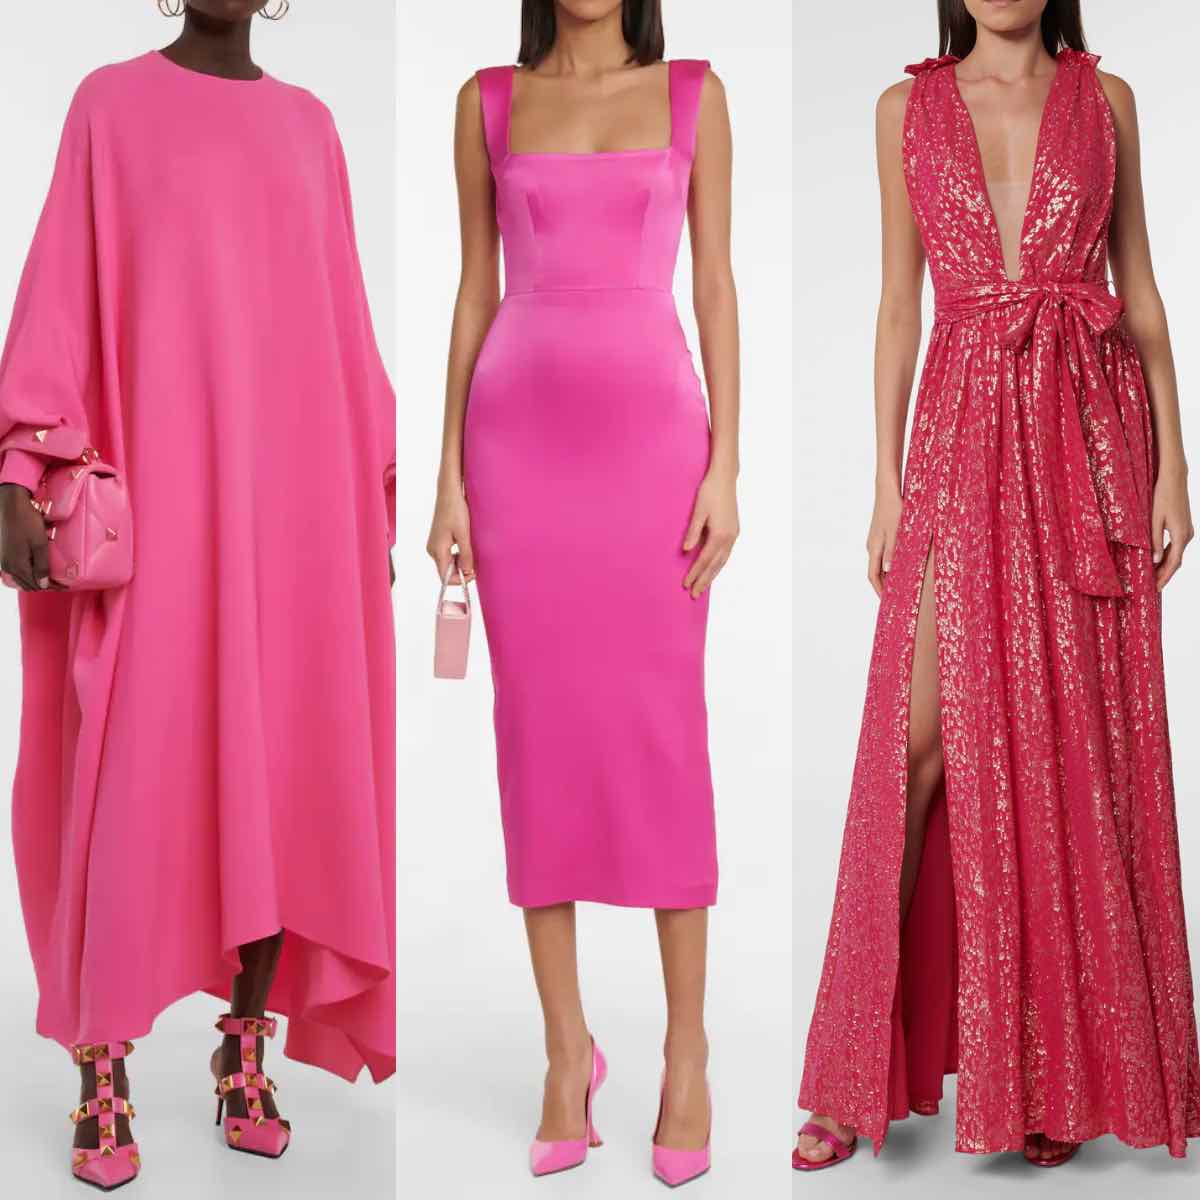 Women wearing pink dresses with pink heels